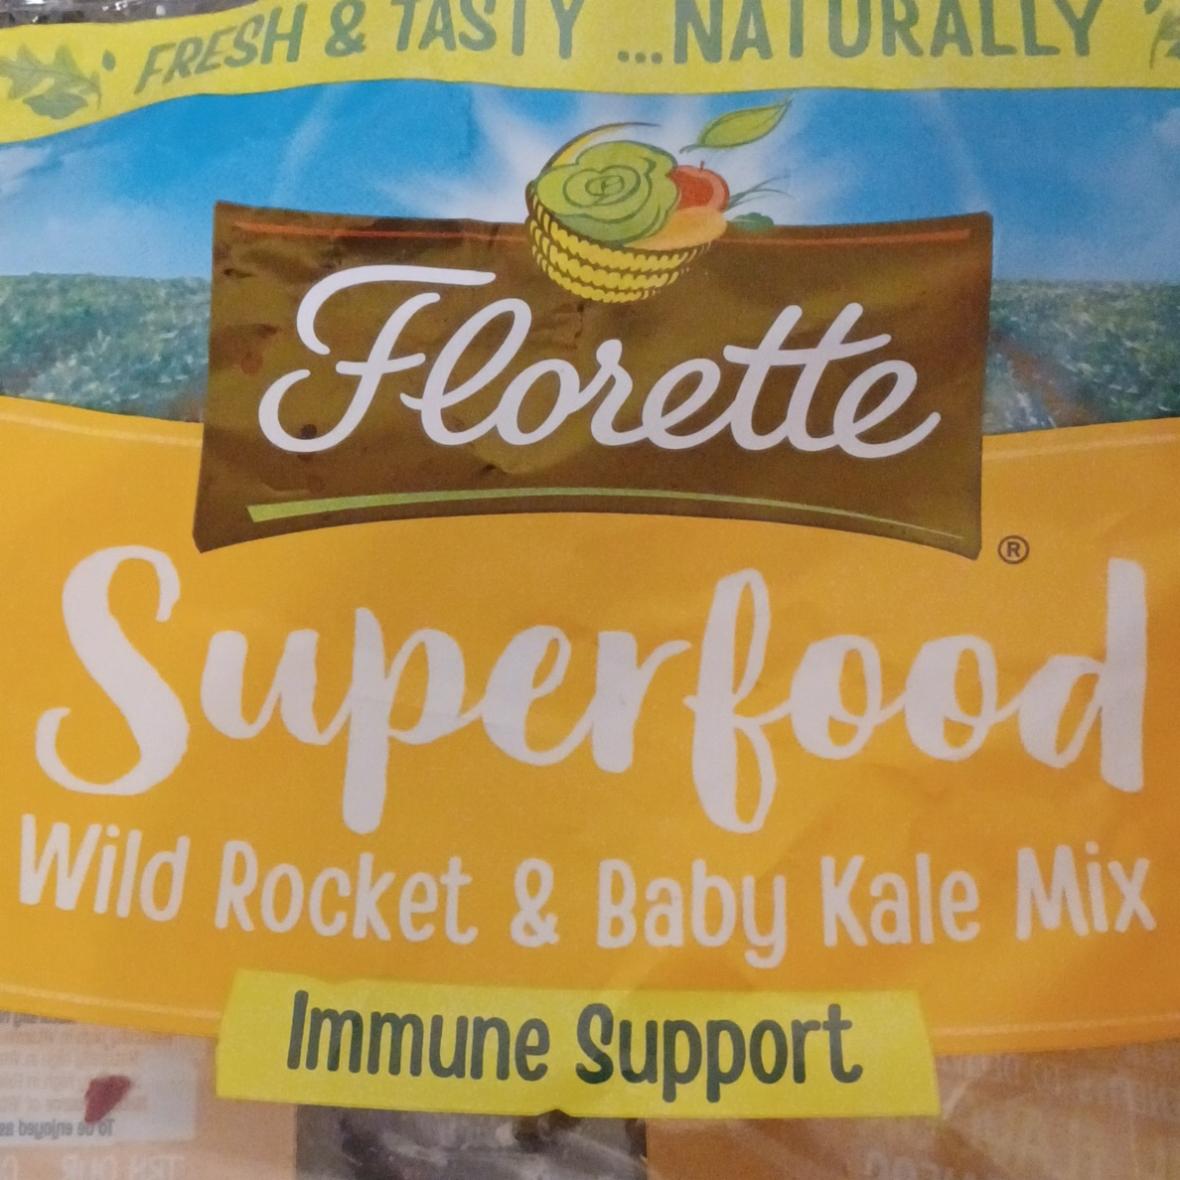 Fotografie - Superfood Wild Rocket & Baby Kale Mix Florette